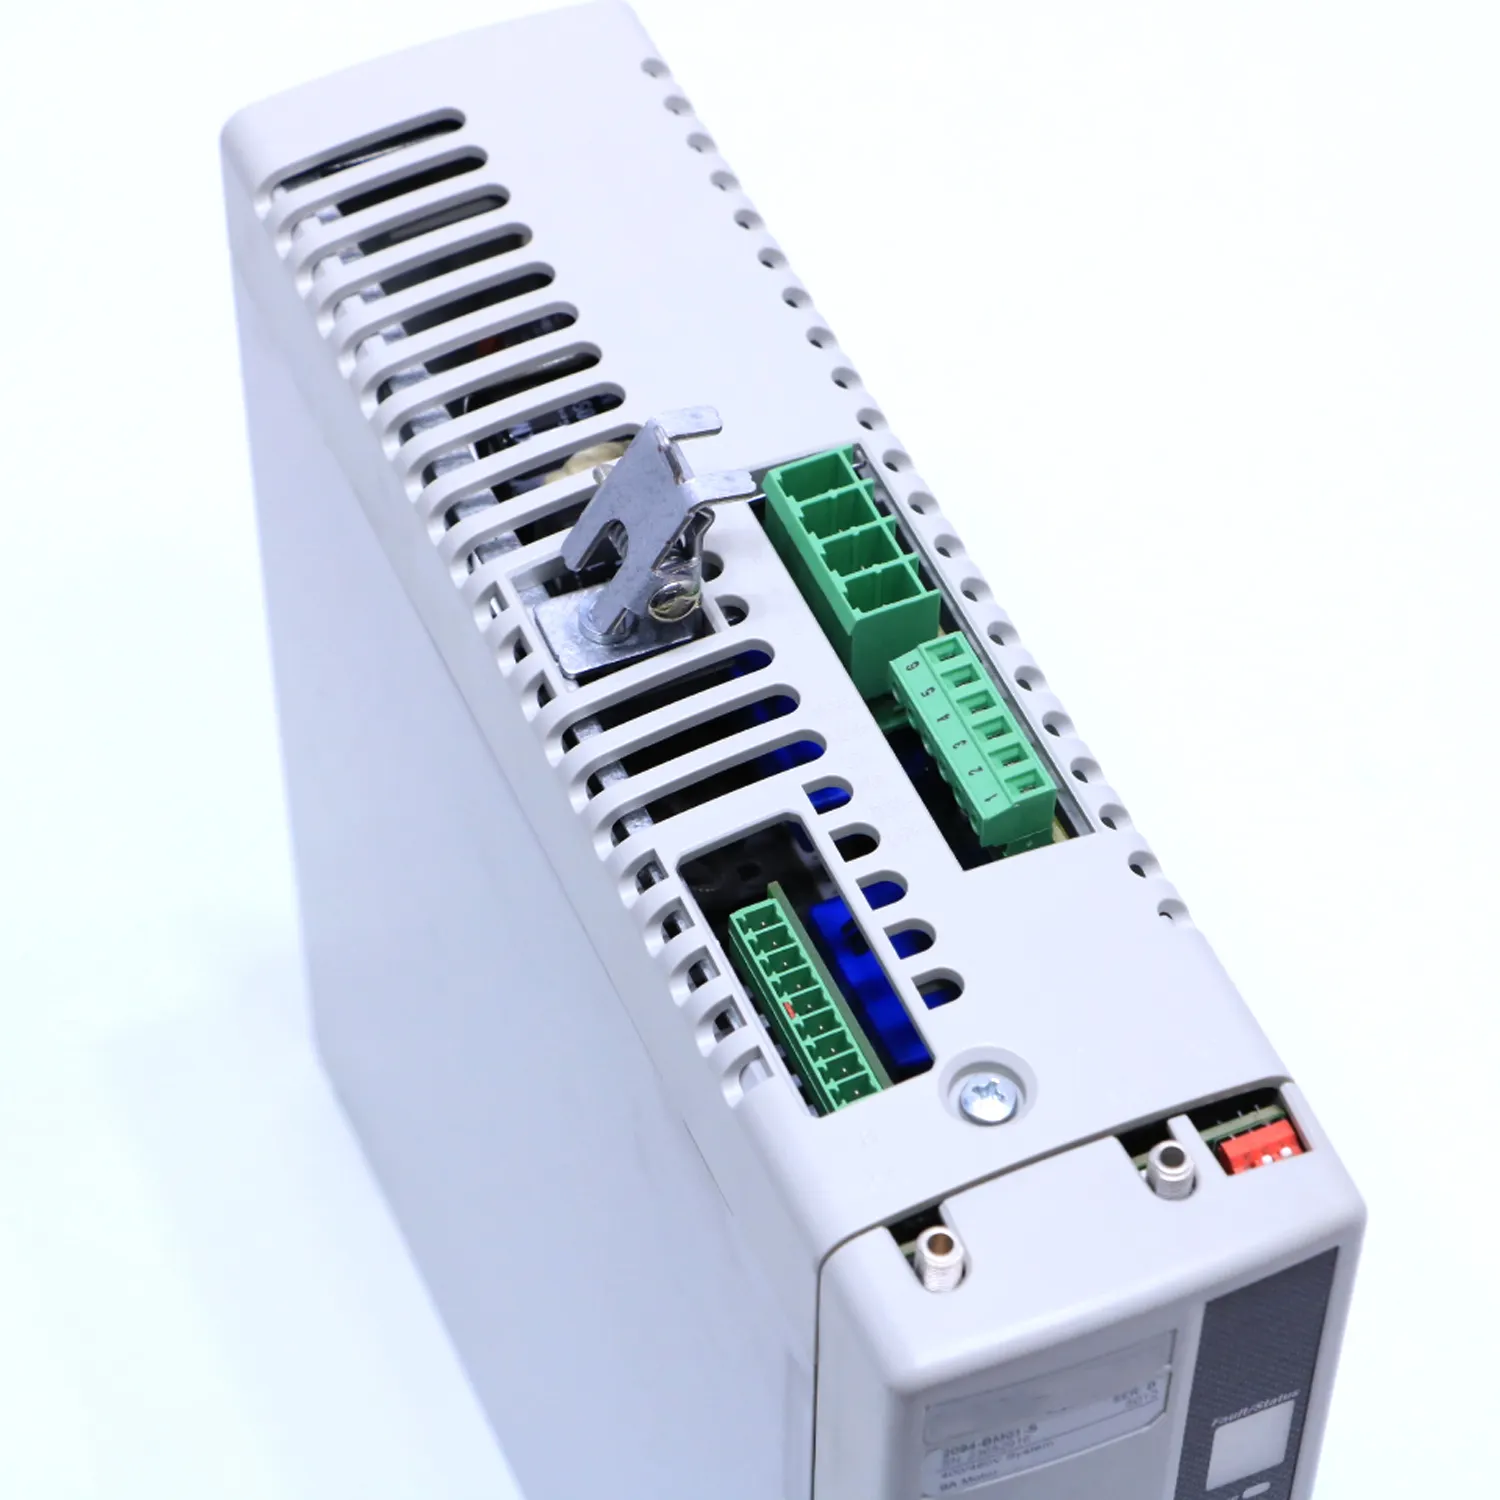 Originele Plc 1492 Spm2c500 Gloednieuwe Plc Controller Float Switch 1492-spm2c500